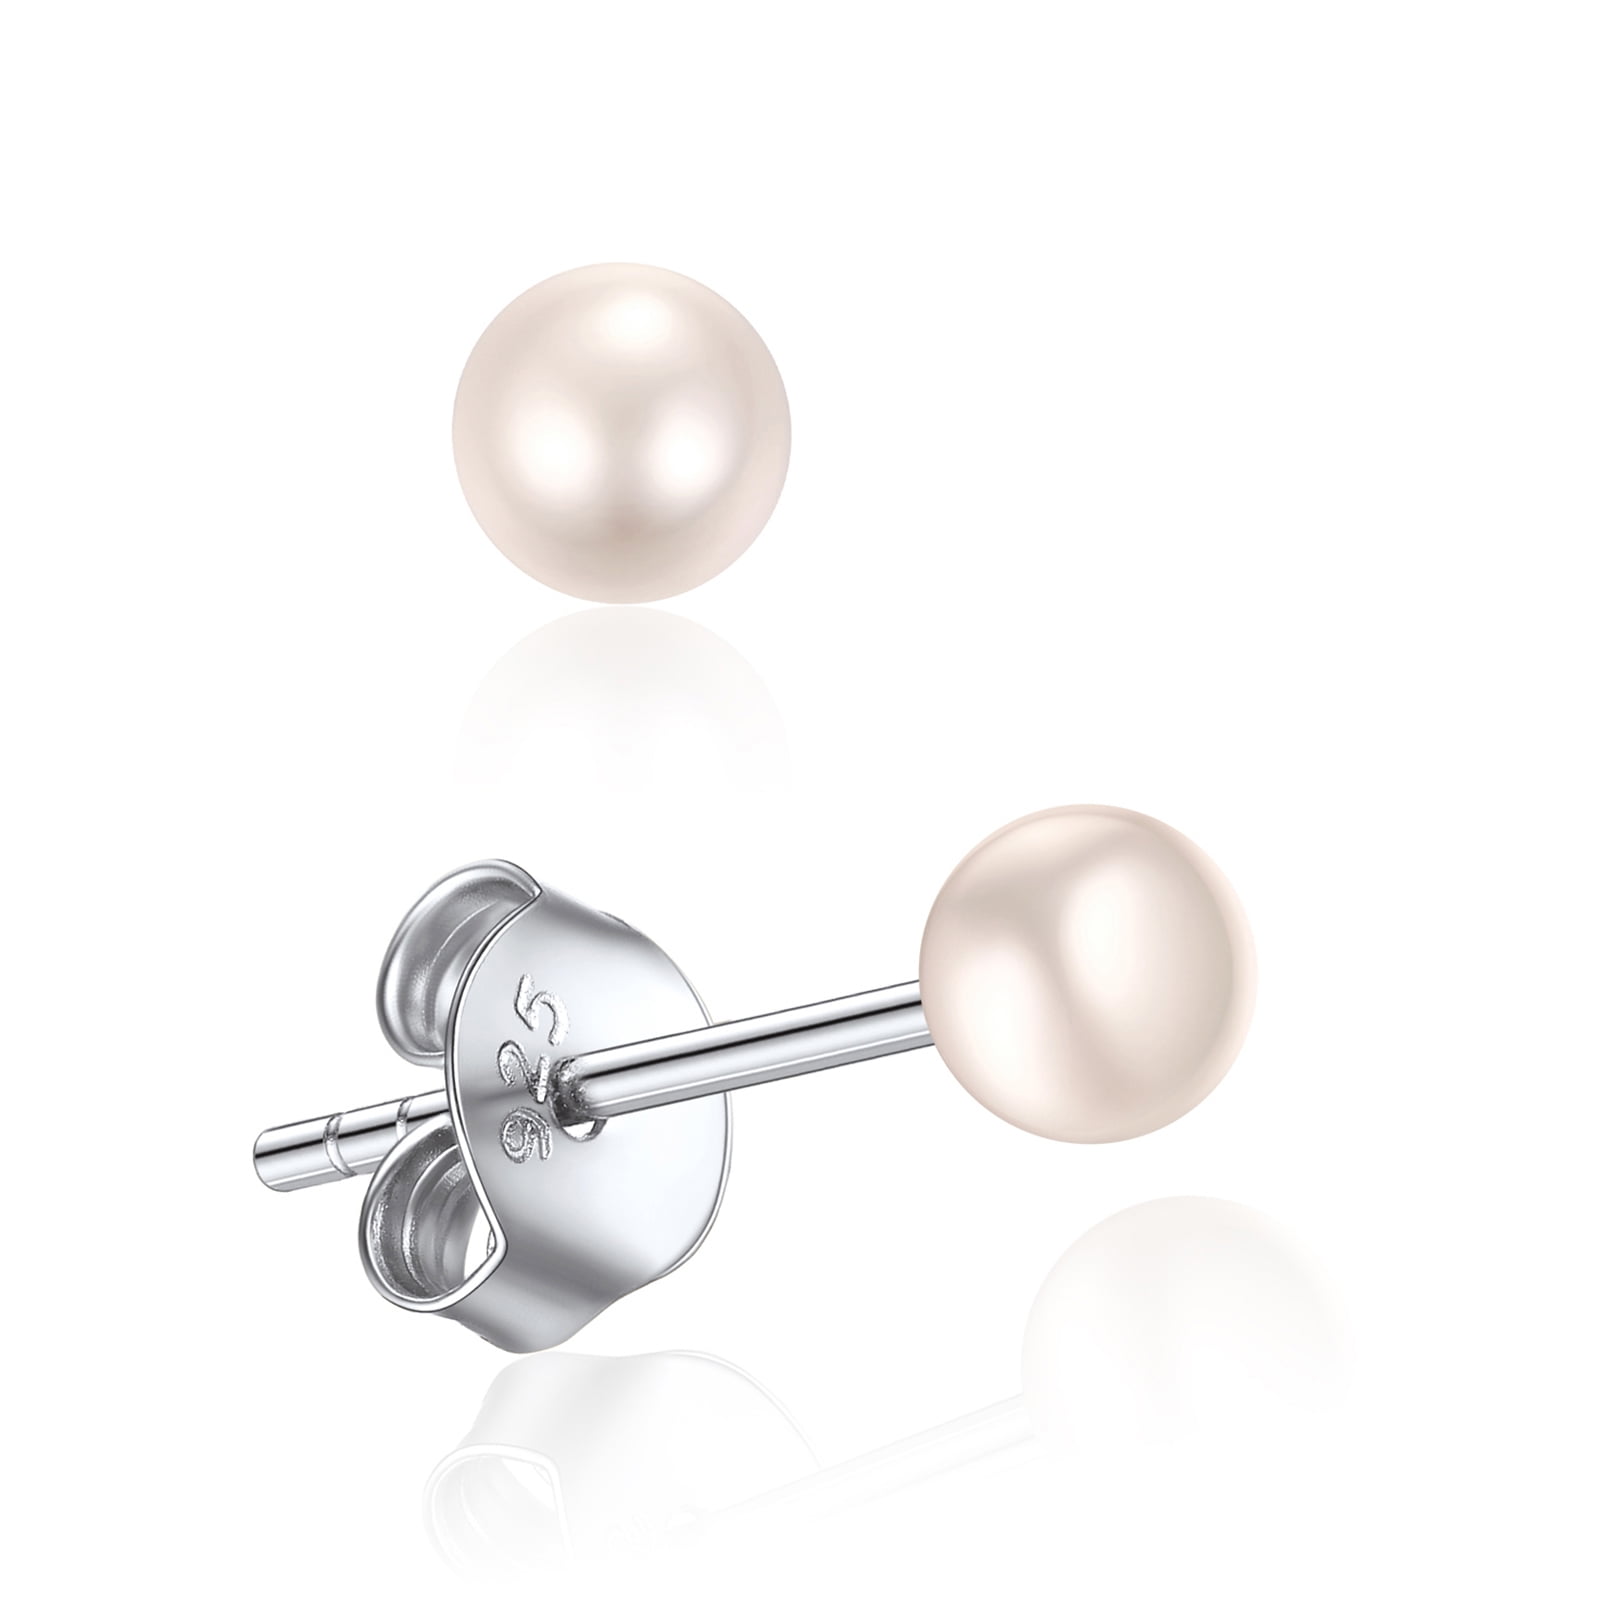 Buy/Send GIVA 925 Silver White Pearl Earrings Online- FNP